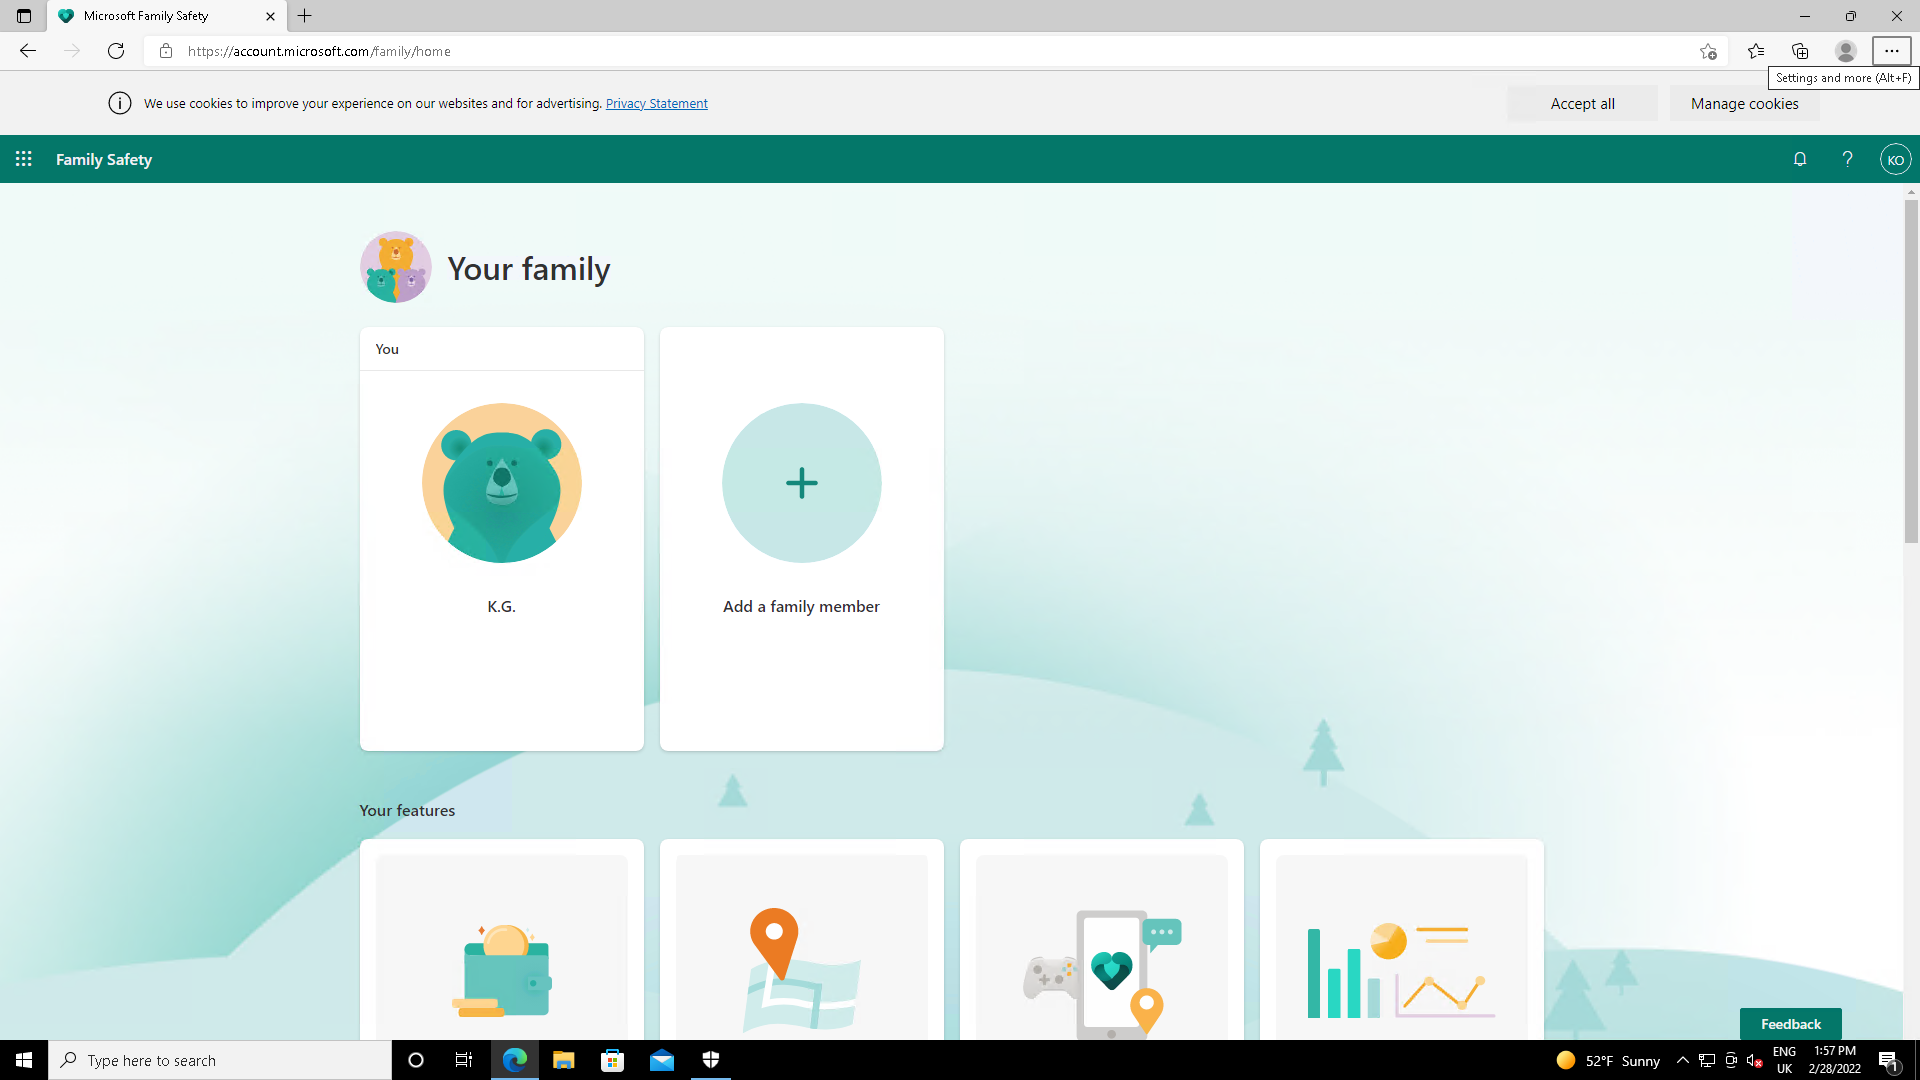 Microsoft family web interface screen shows add a family member box 